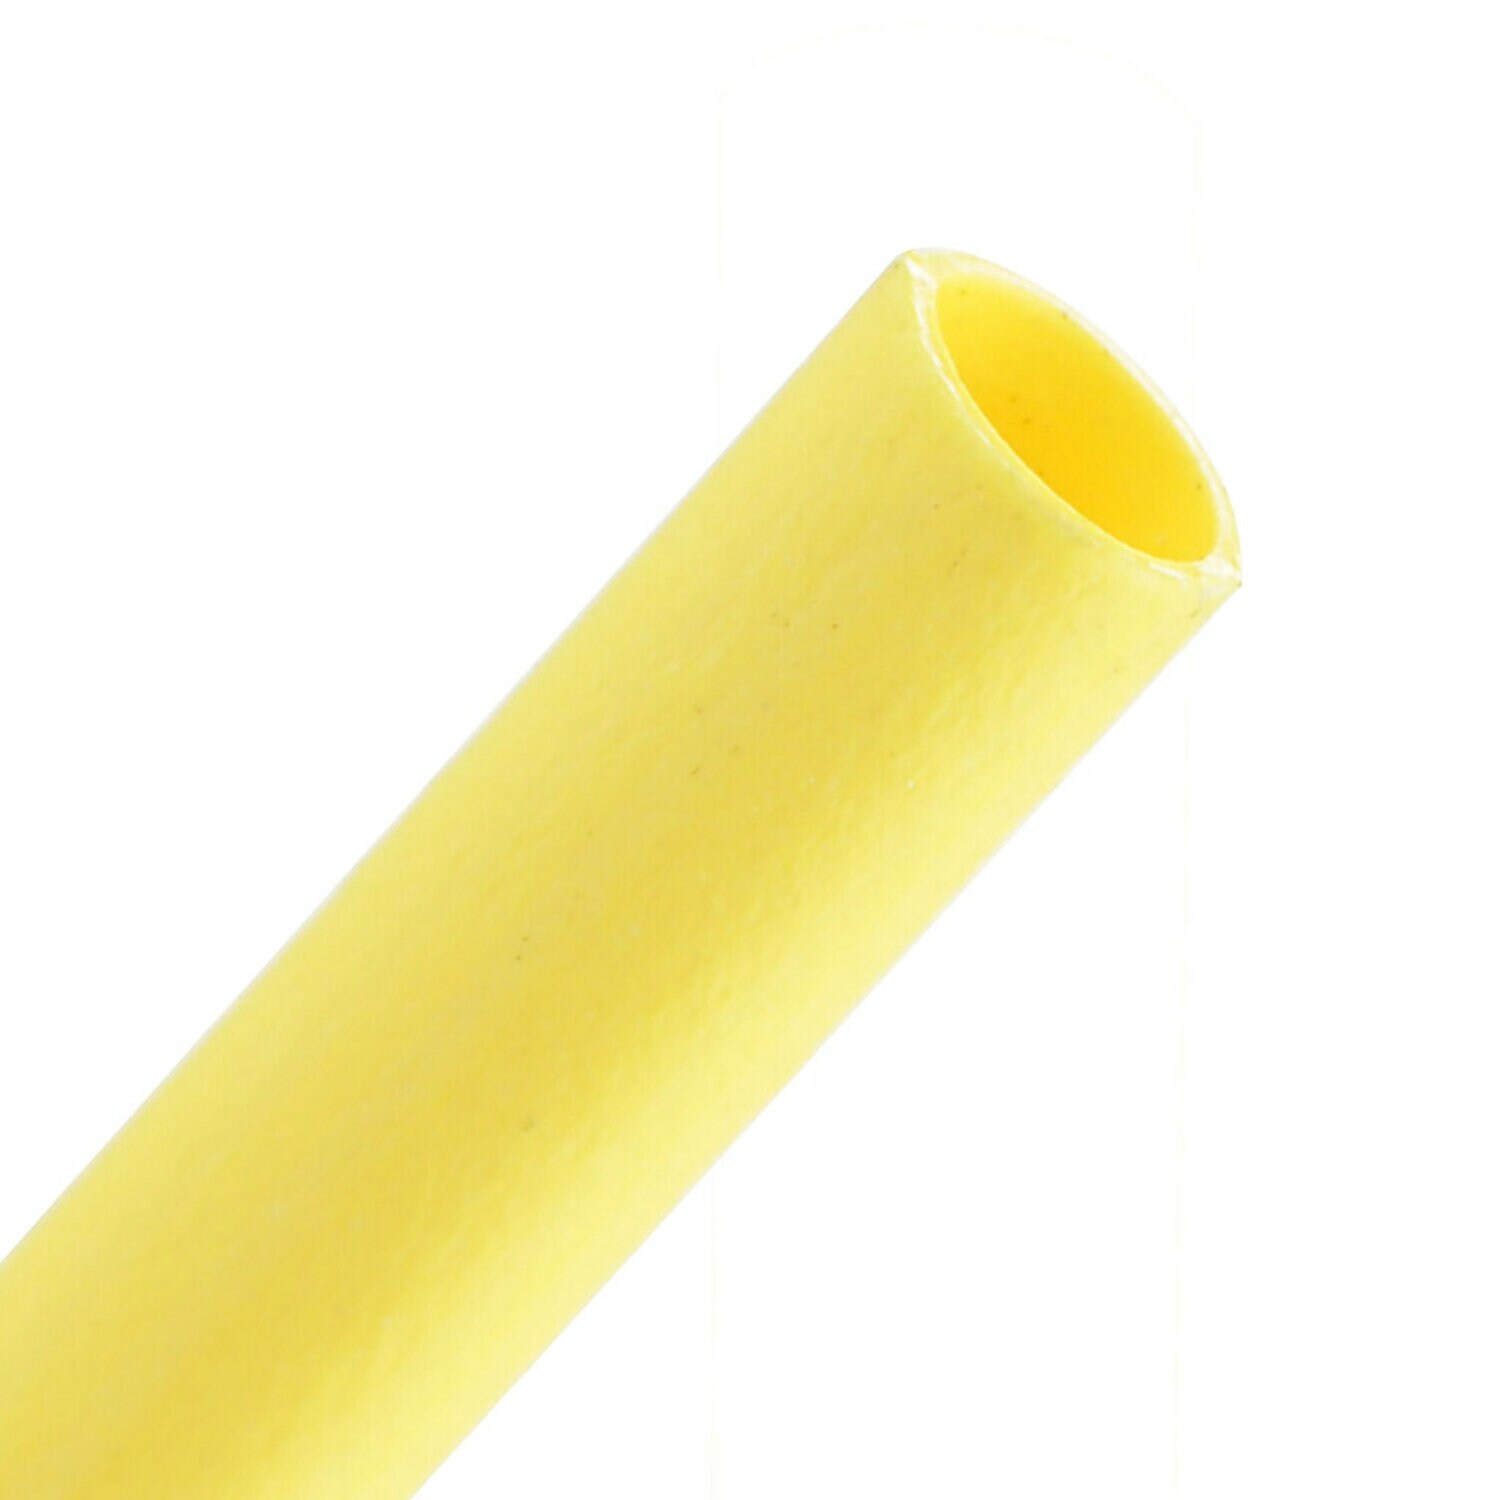 7100020160 - 3M Heat Shrink Thin-Wall Tubing FP-301-1/8-Yellow-500`: 500 ft spool
length, 1500 ft/box, 3 Rolls/Case